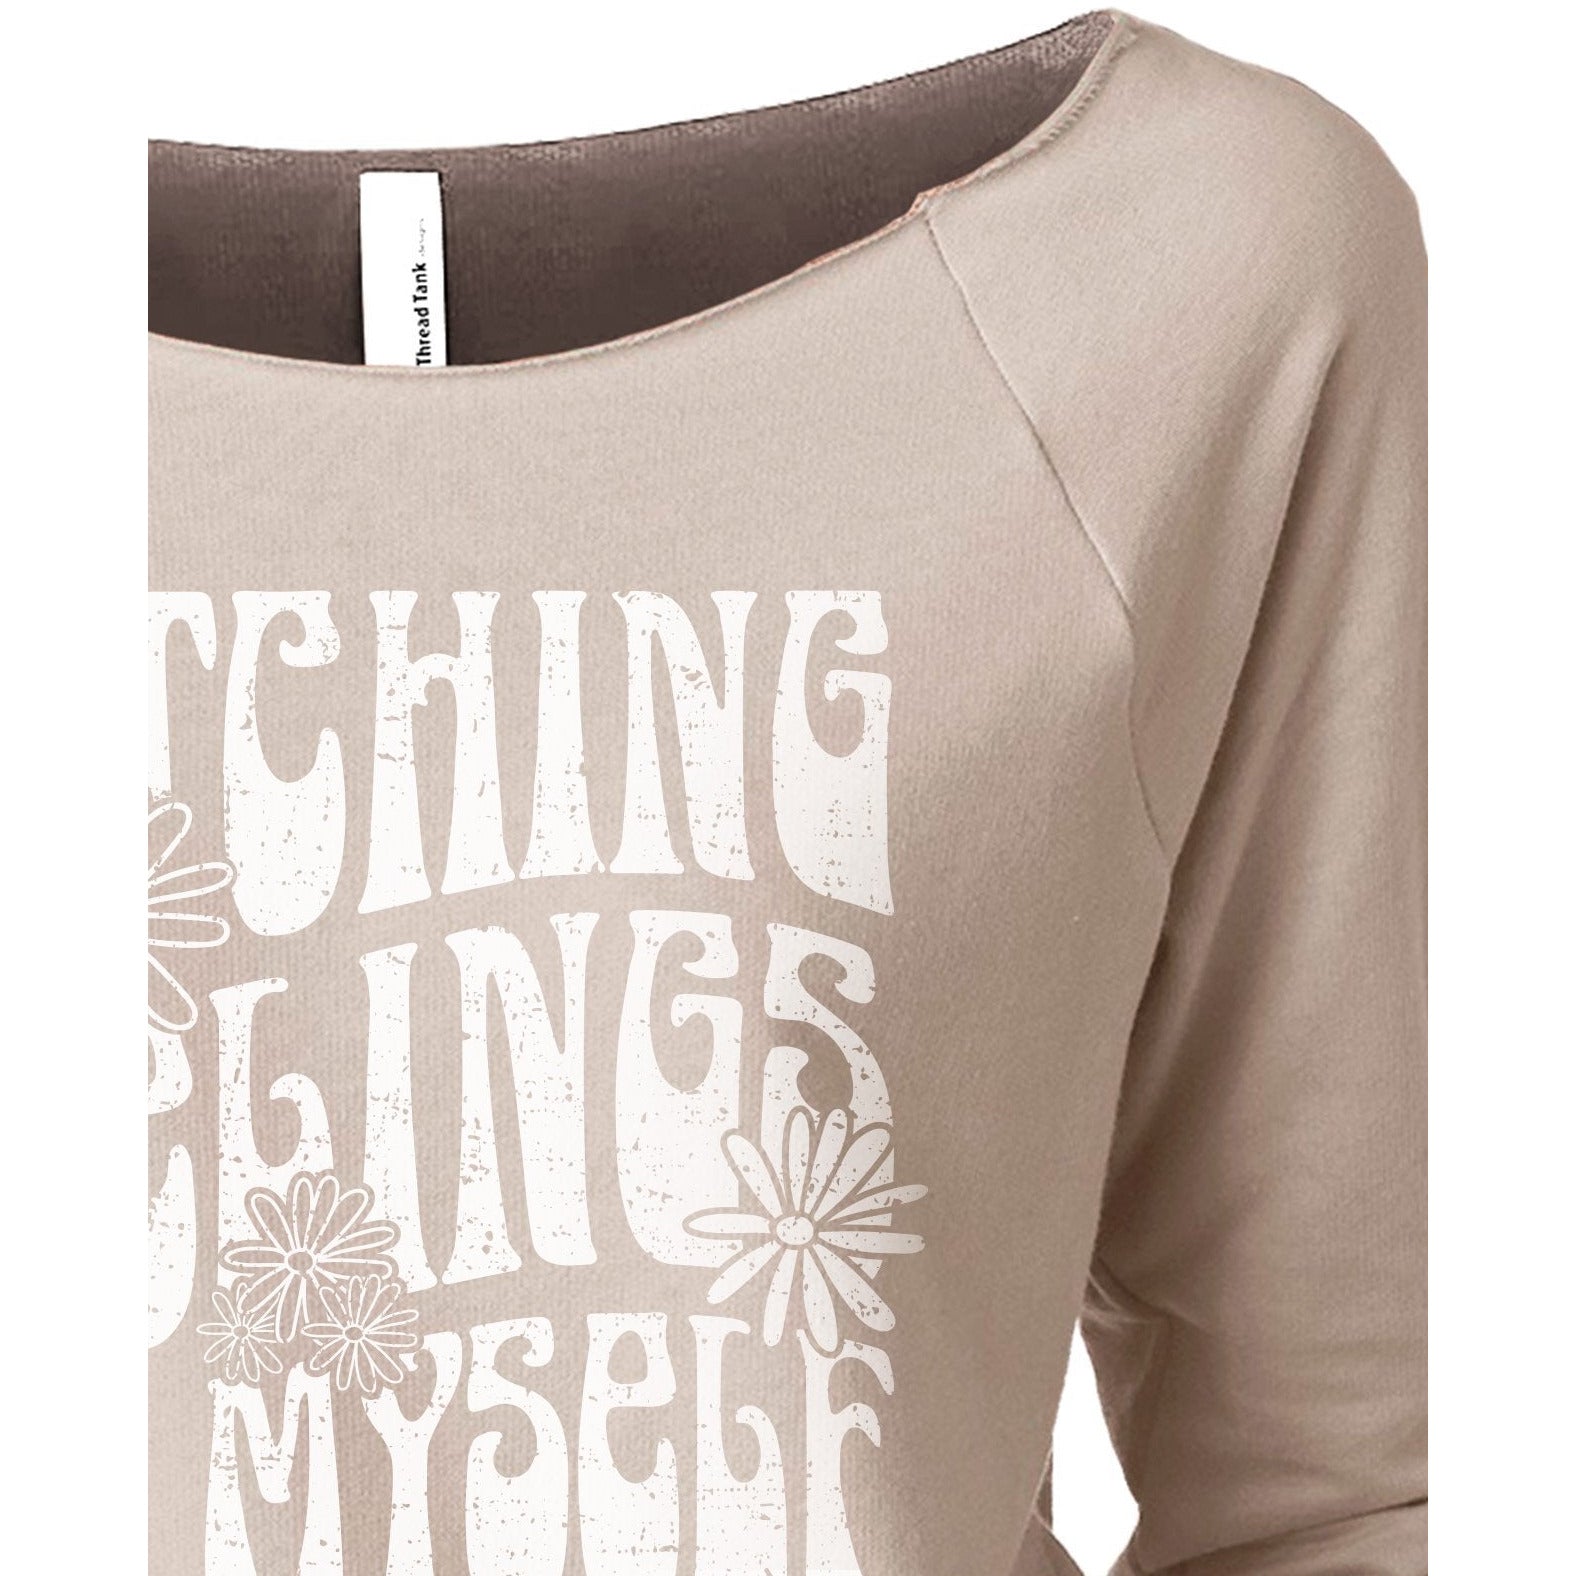 Catching Feelings For Myself Women's Graphic Printed Lightweight Slouchy 3/4 Sleeves Sweatshirt Dust Closeup